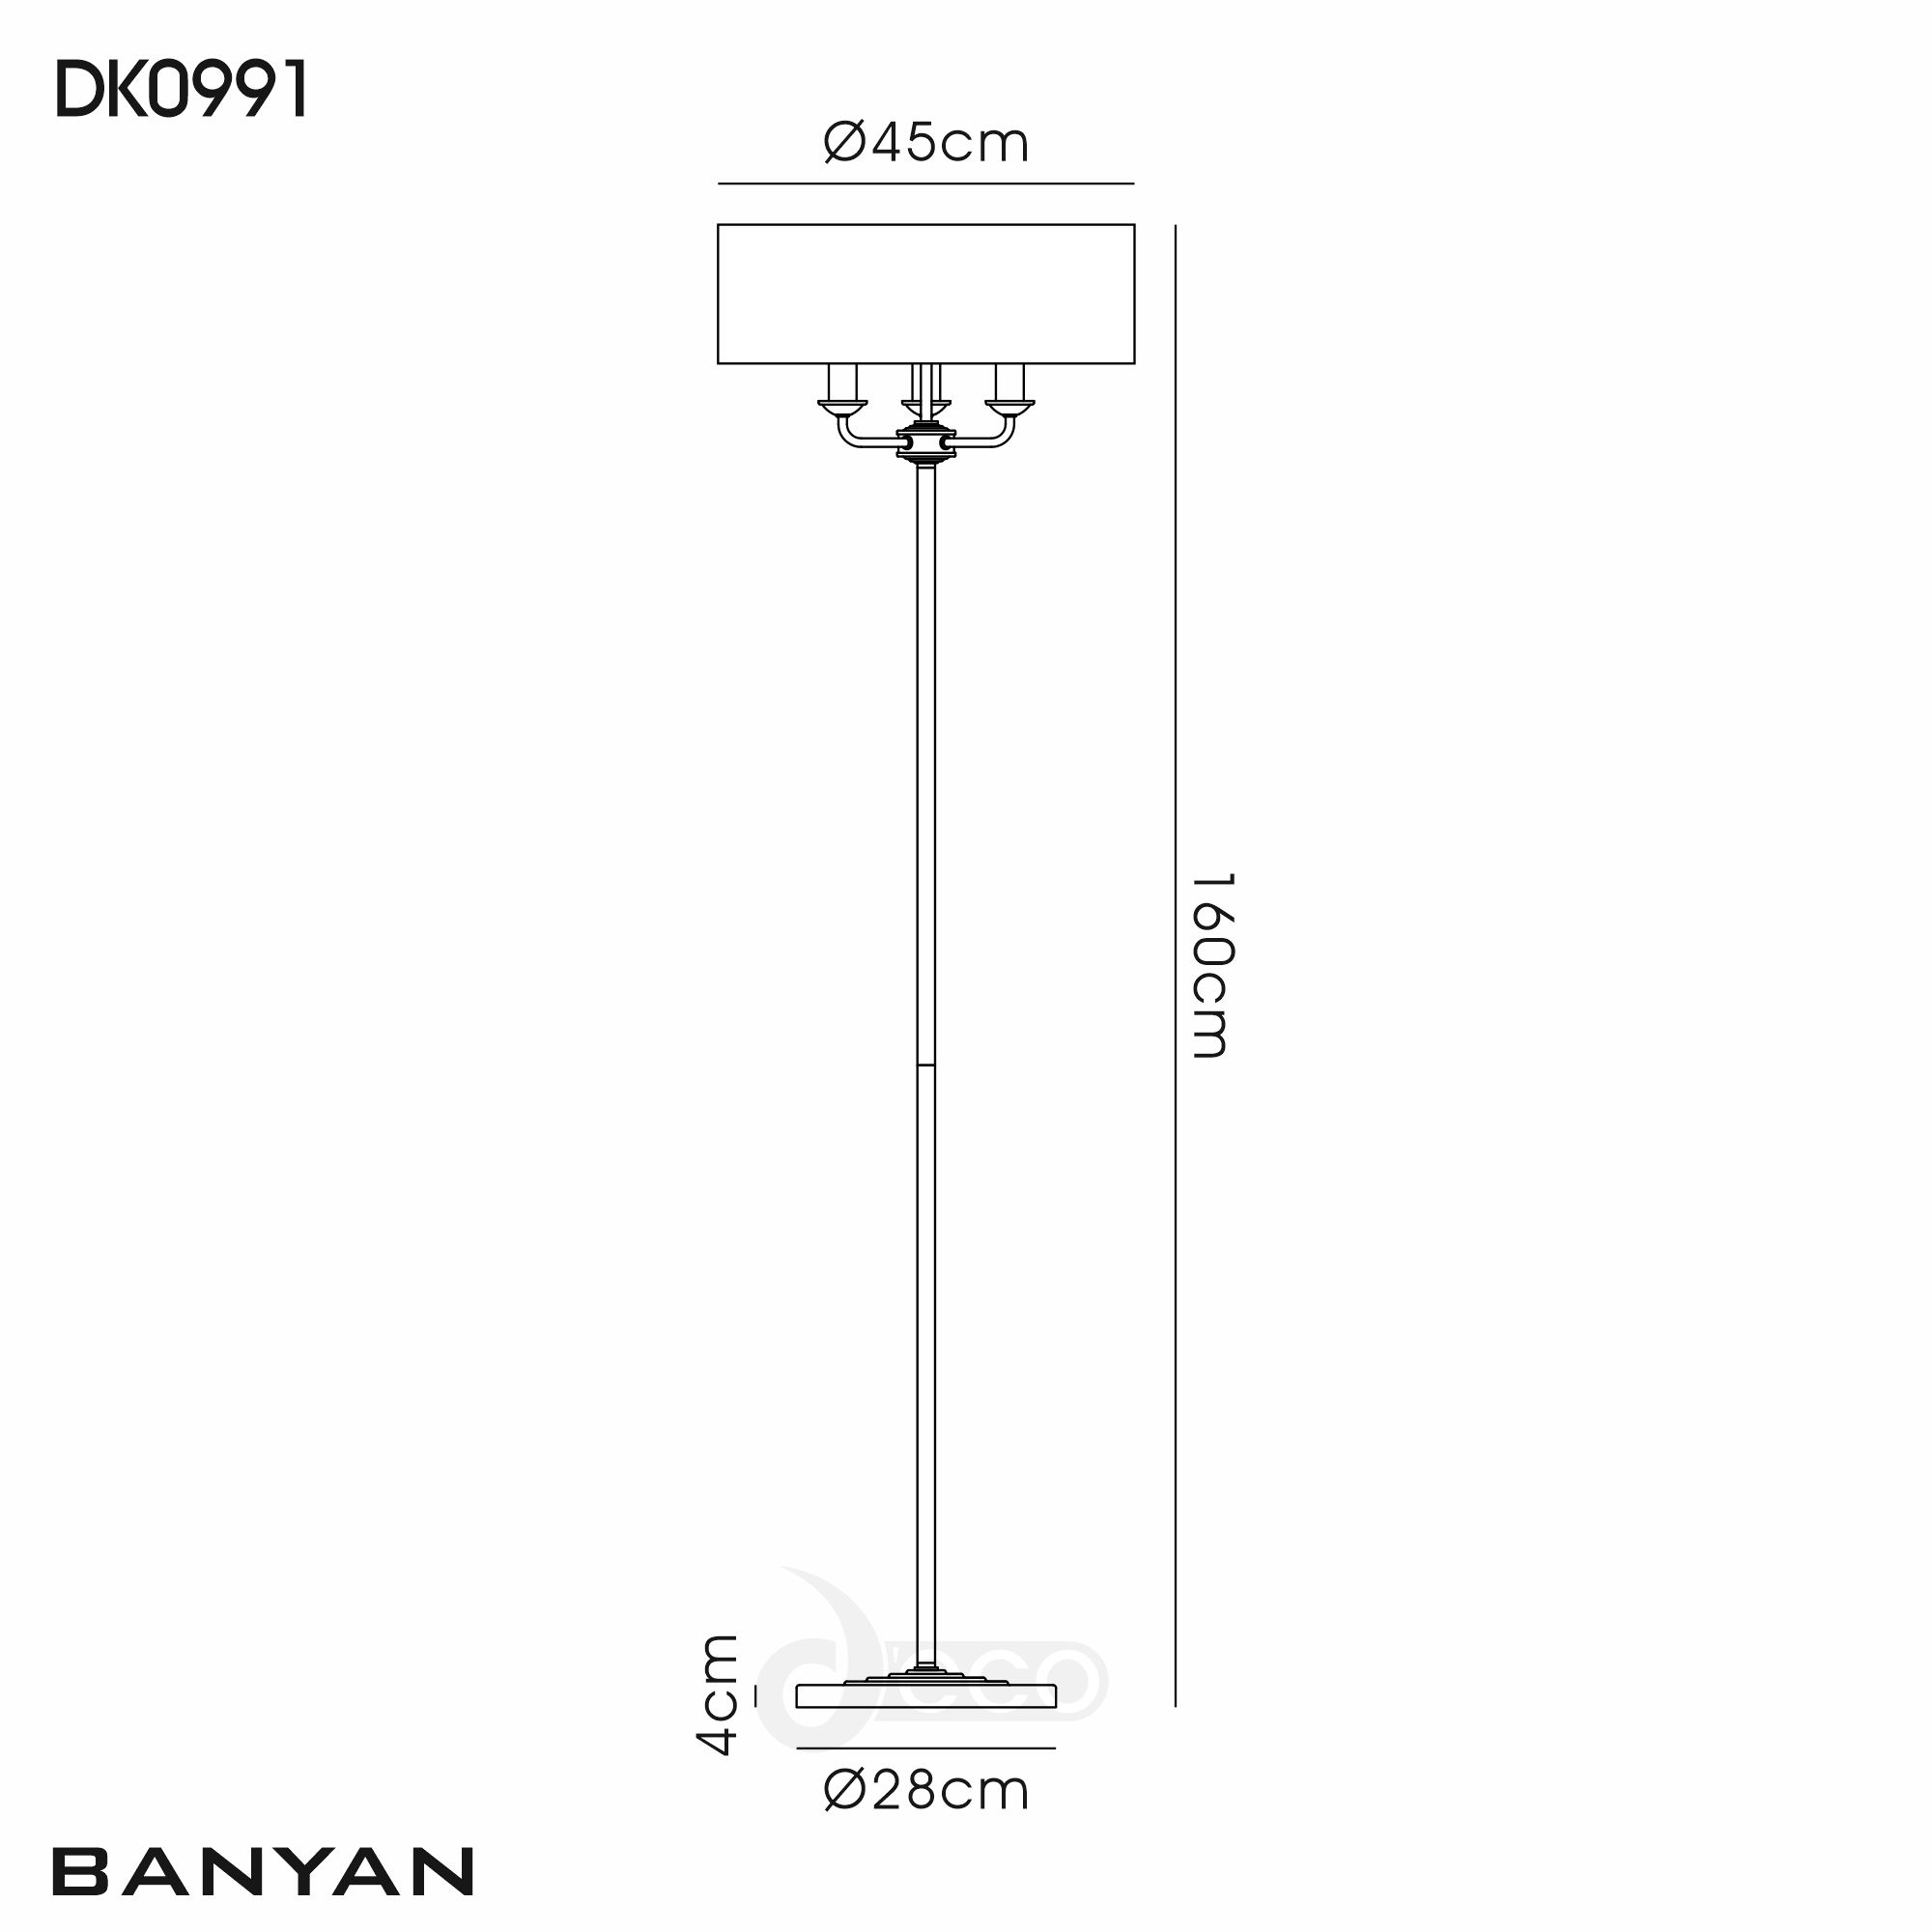 DK0991  Banyan 45cm 3 Light Floor Lamp Champagne Gold, Nude Beige